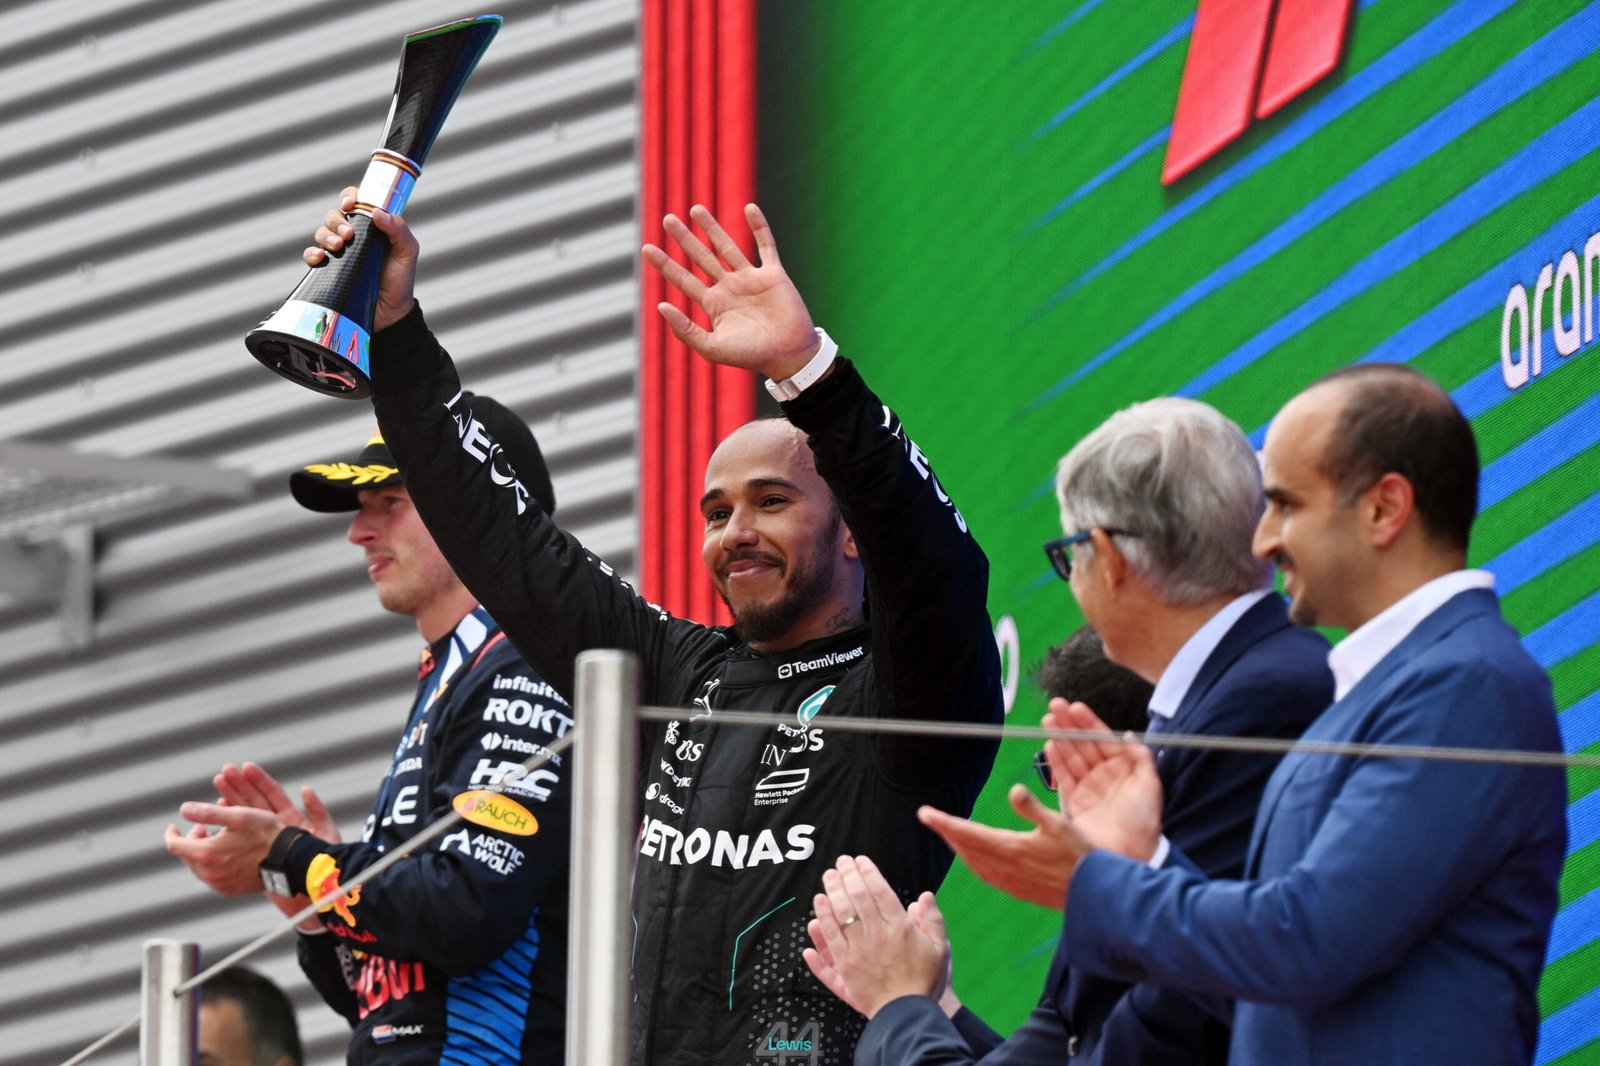 ‘Good to be back,’ says Lewis Hamilton after podium return